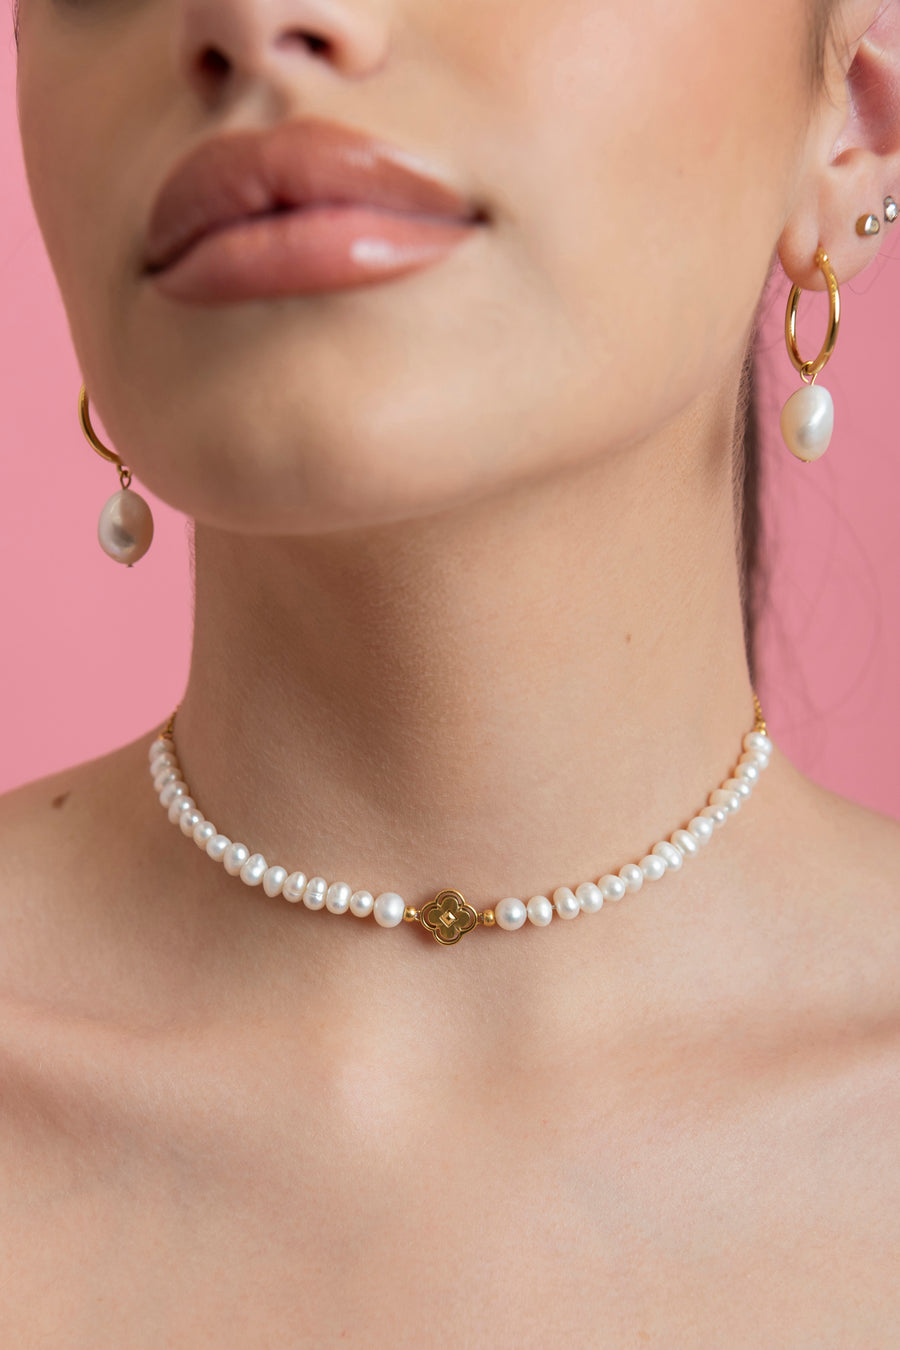 Maisie’s Freshwater Pearl Choker & Dara's Freshwater Pearl Bracelet Gift Set